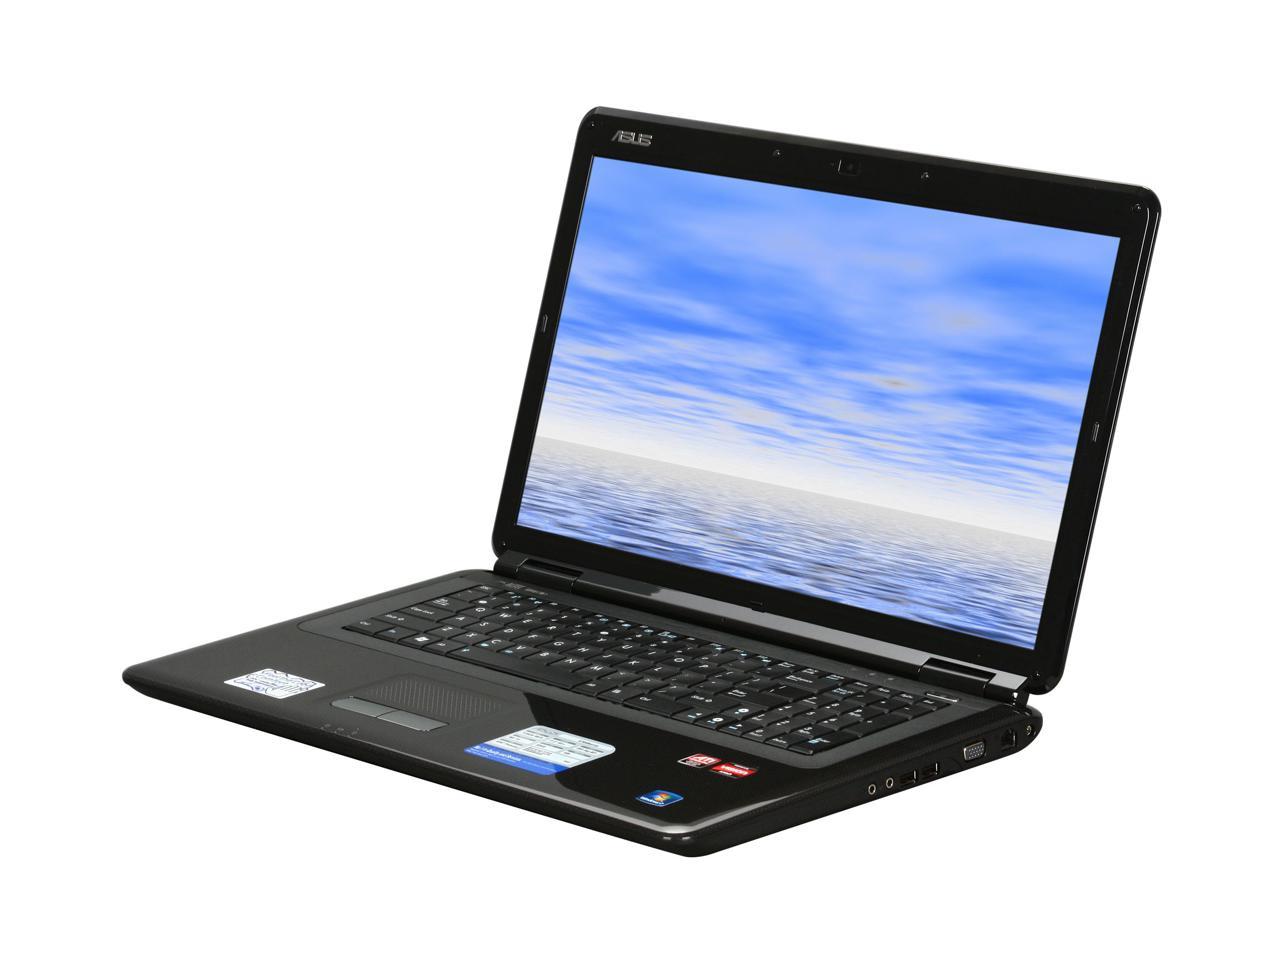 ASUS Laptop AMD Turion 64 X2 RM-75 4GB Memory 320GB HDD ATI Mobility ...